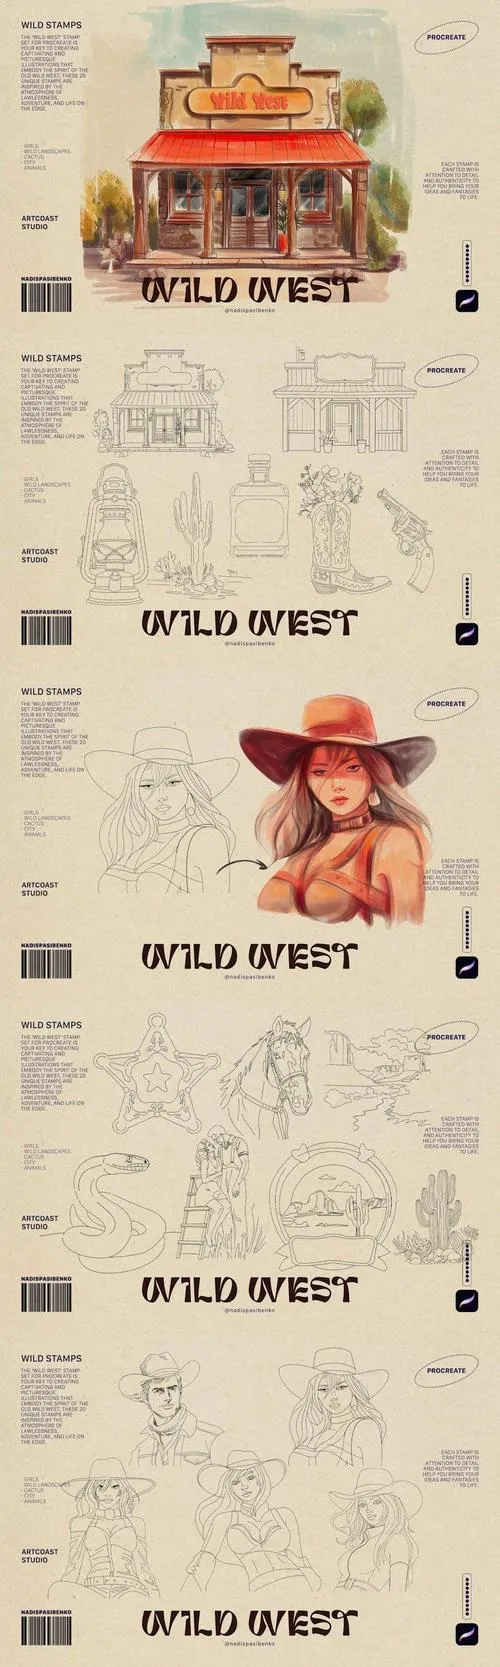 Wild West Stamps